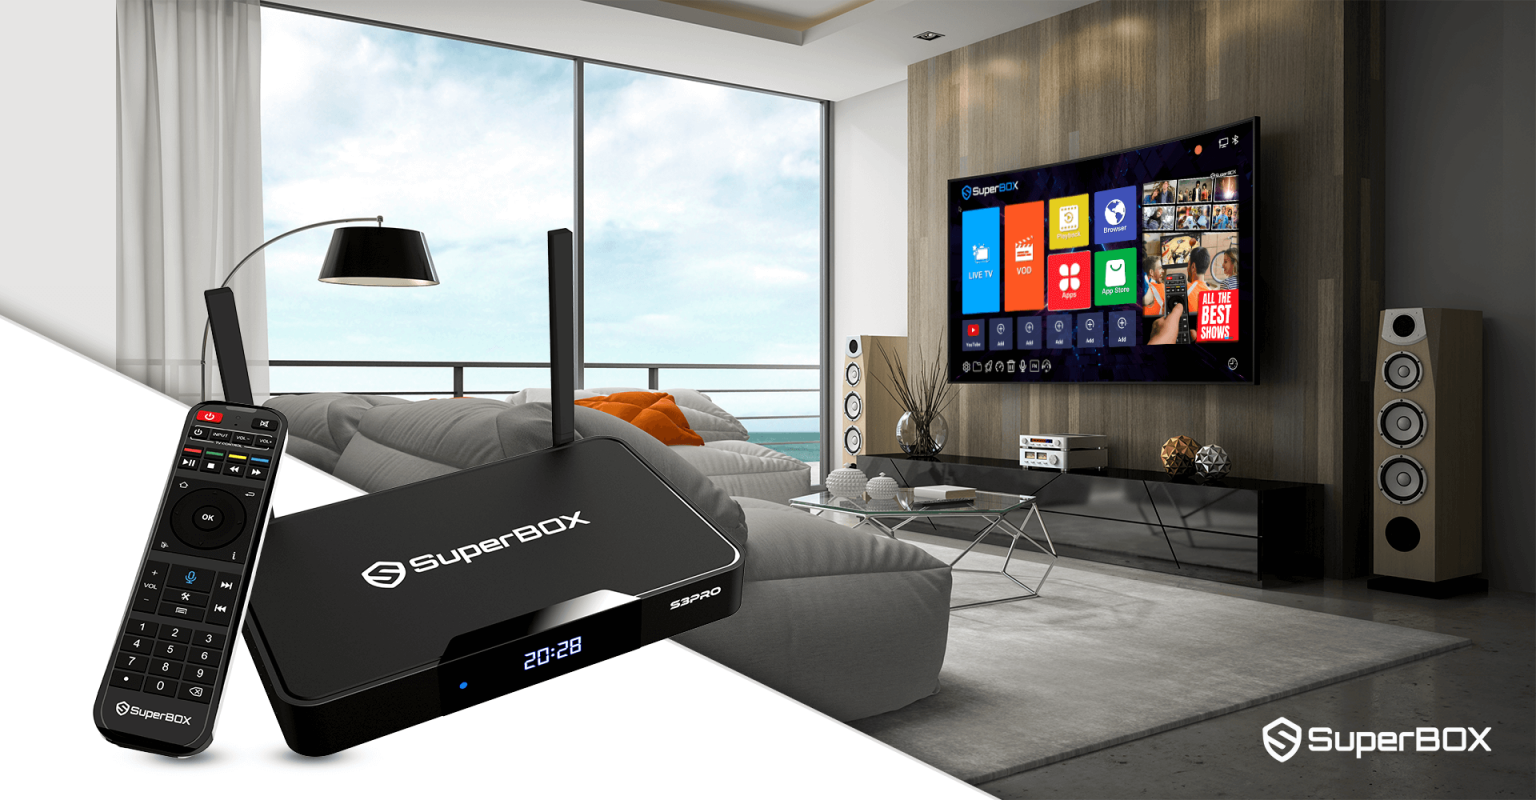 Introducing The Next Level Set Top IPTV BoxSuperBox S3 Pro SuperBox